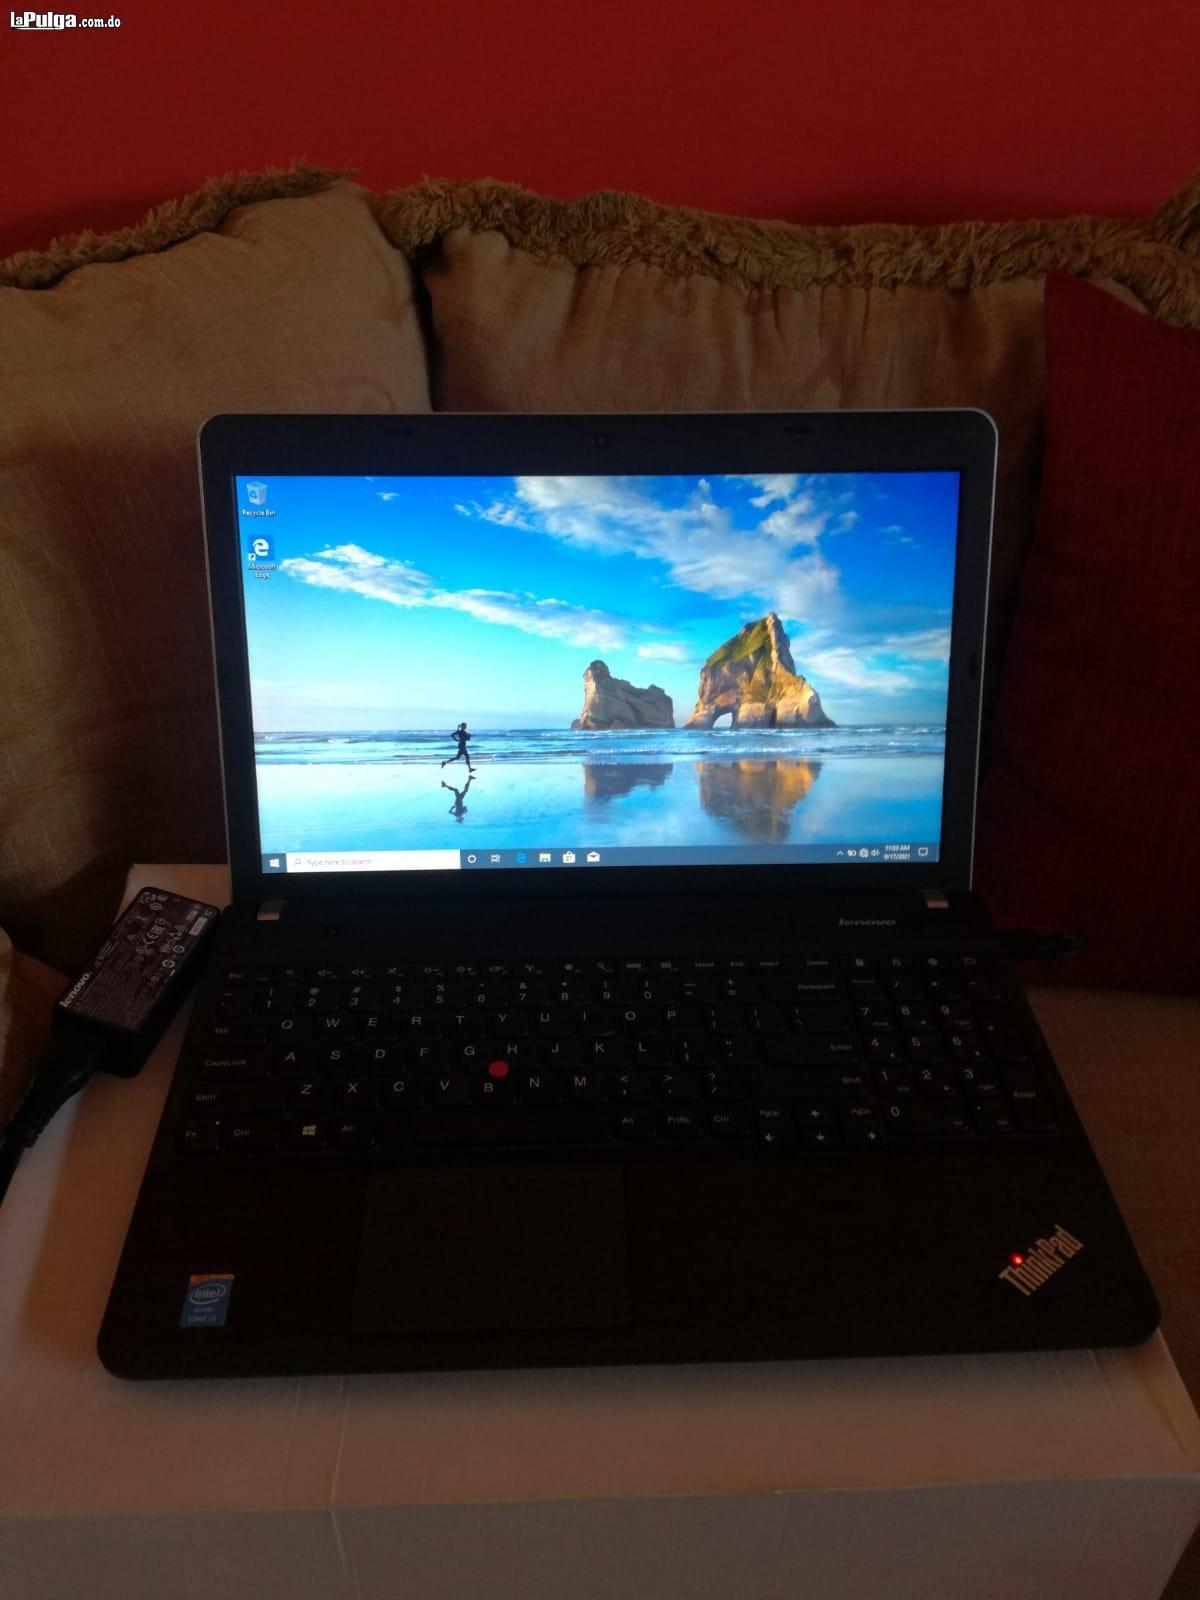 Pc laptop OFERTON Lenovo E540 i3-4000m 6gb 120gb SSD Win10 Esp Foto 7149597-4.jpg